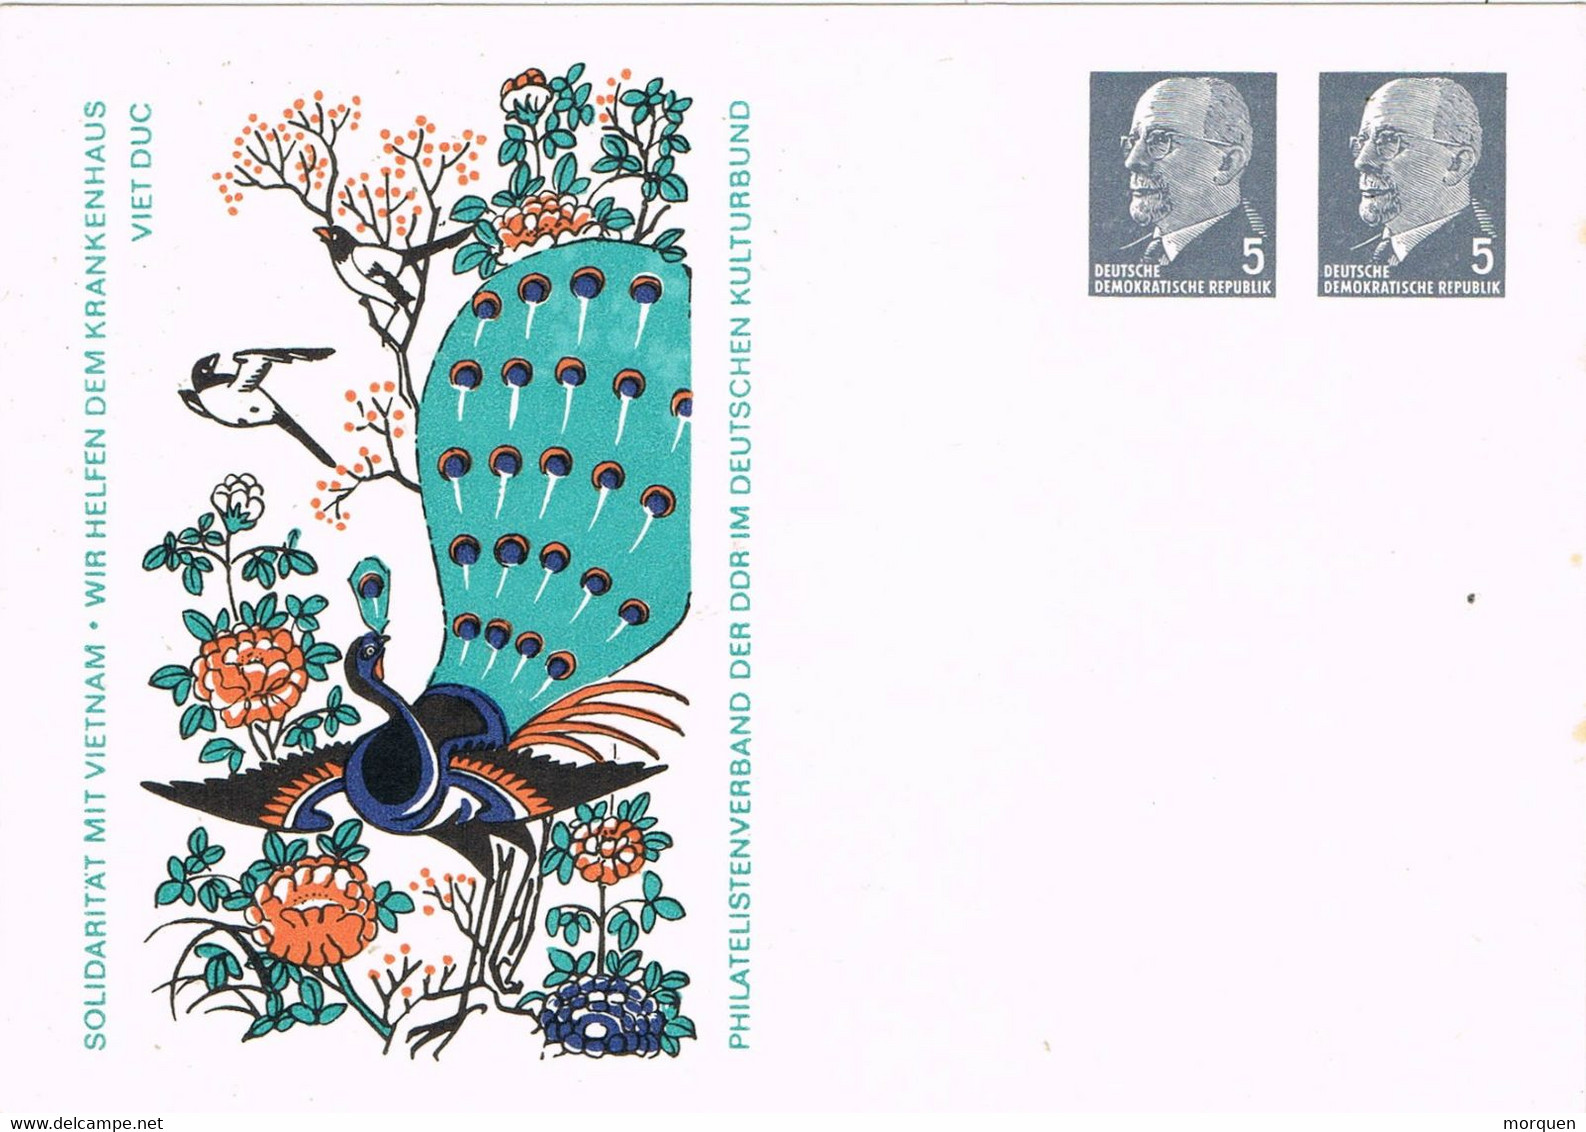 38773. 4 Entero Postal, Postcard 5+5 Pf. Solidaritat Mit VIETNAM, Fish, Horse, Pavo, Rooster, Pheasant - Privatpostkarten - Ungebraucht